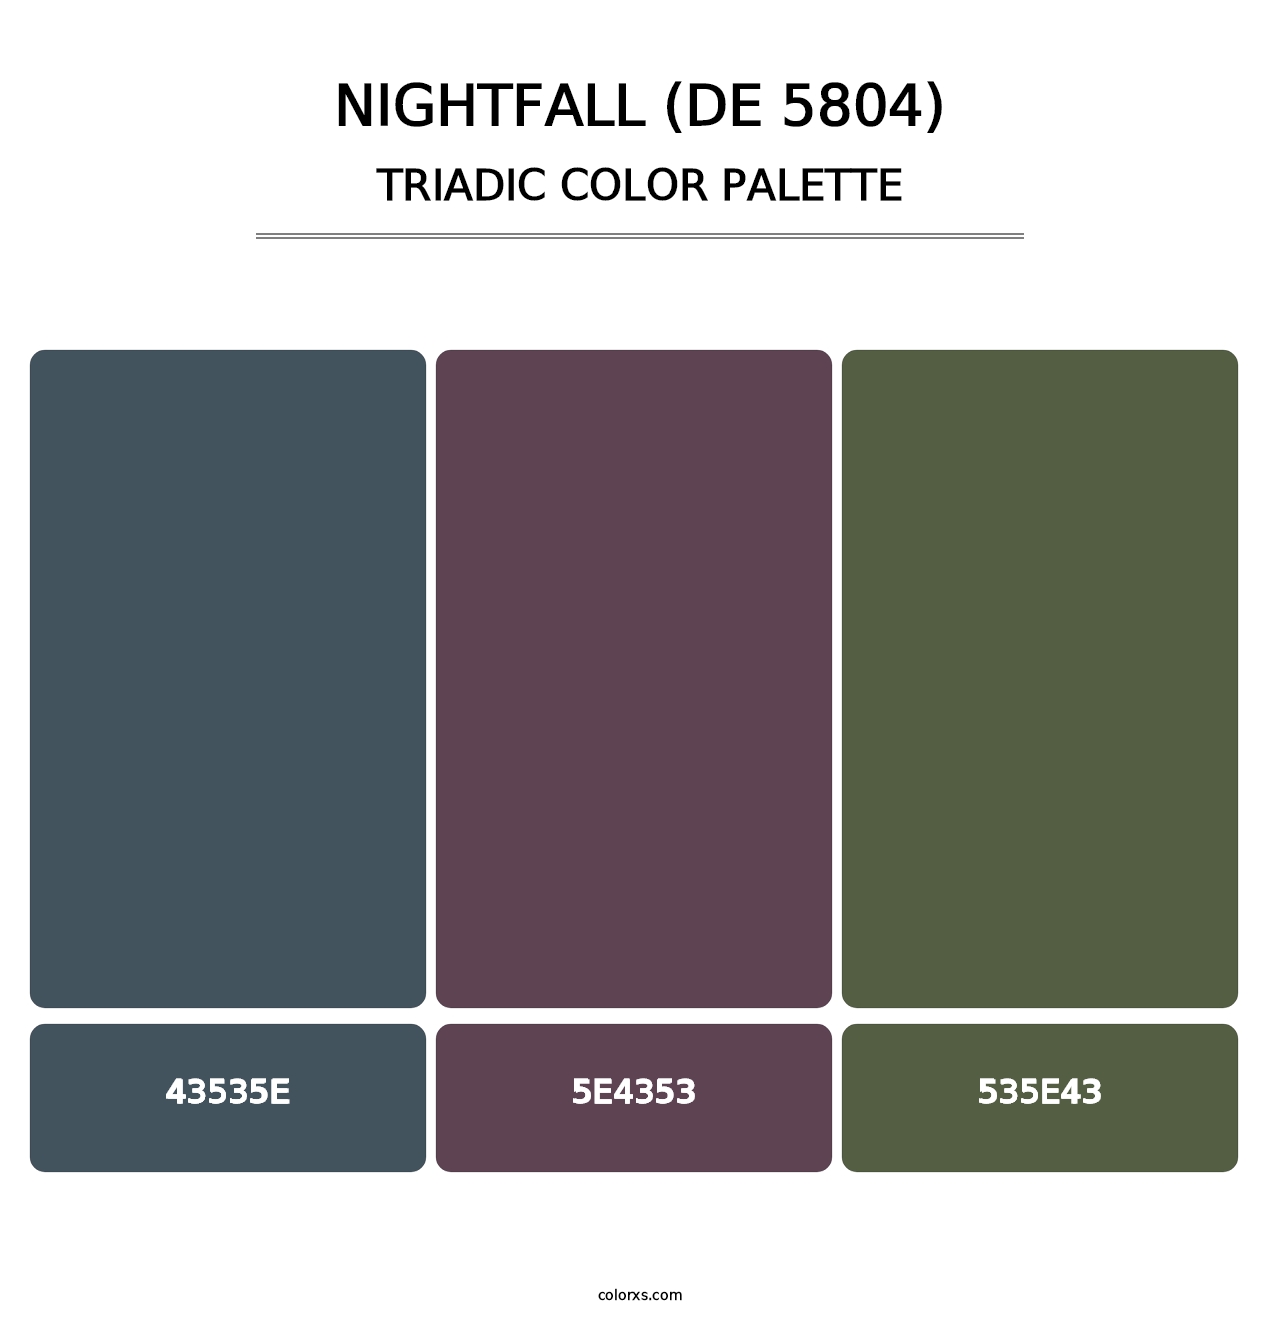 Nightfall (DE 5804) - Triadic Color Palette